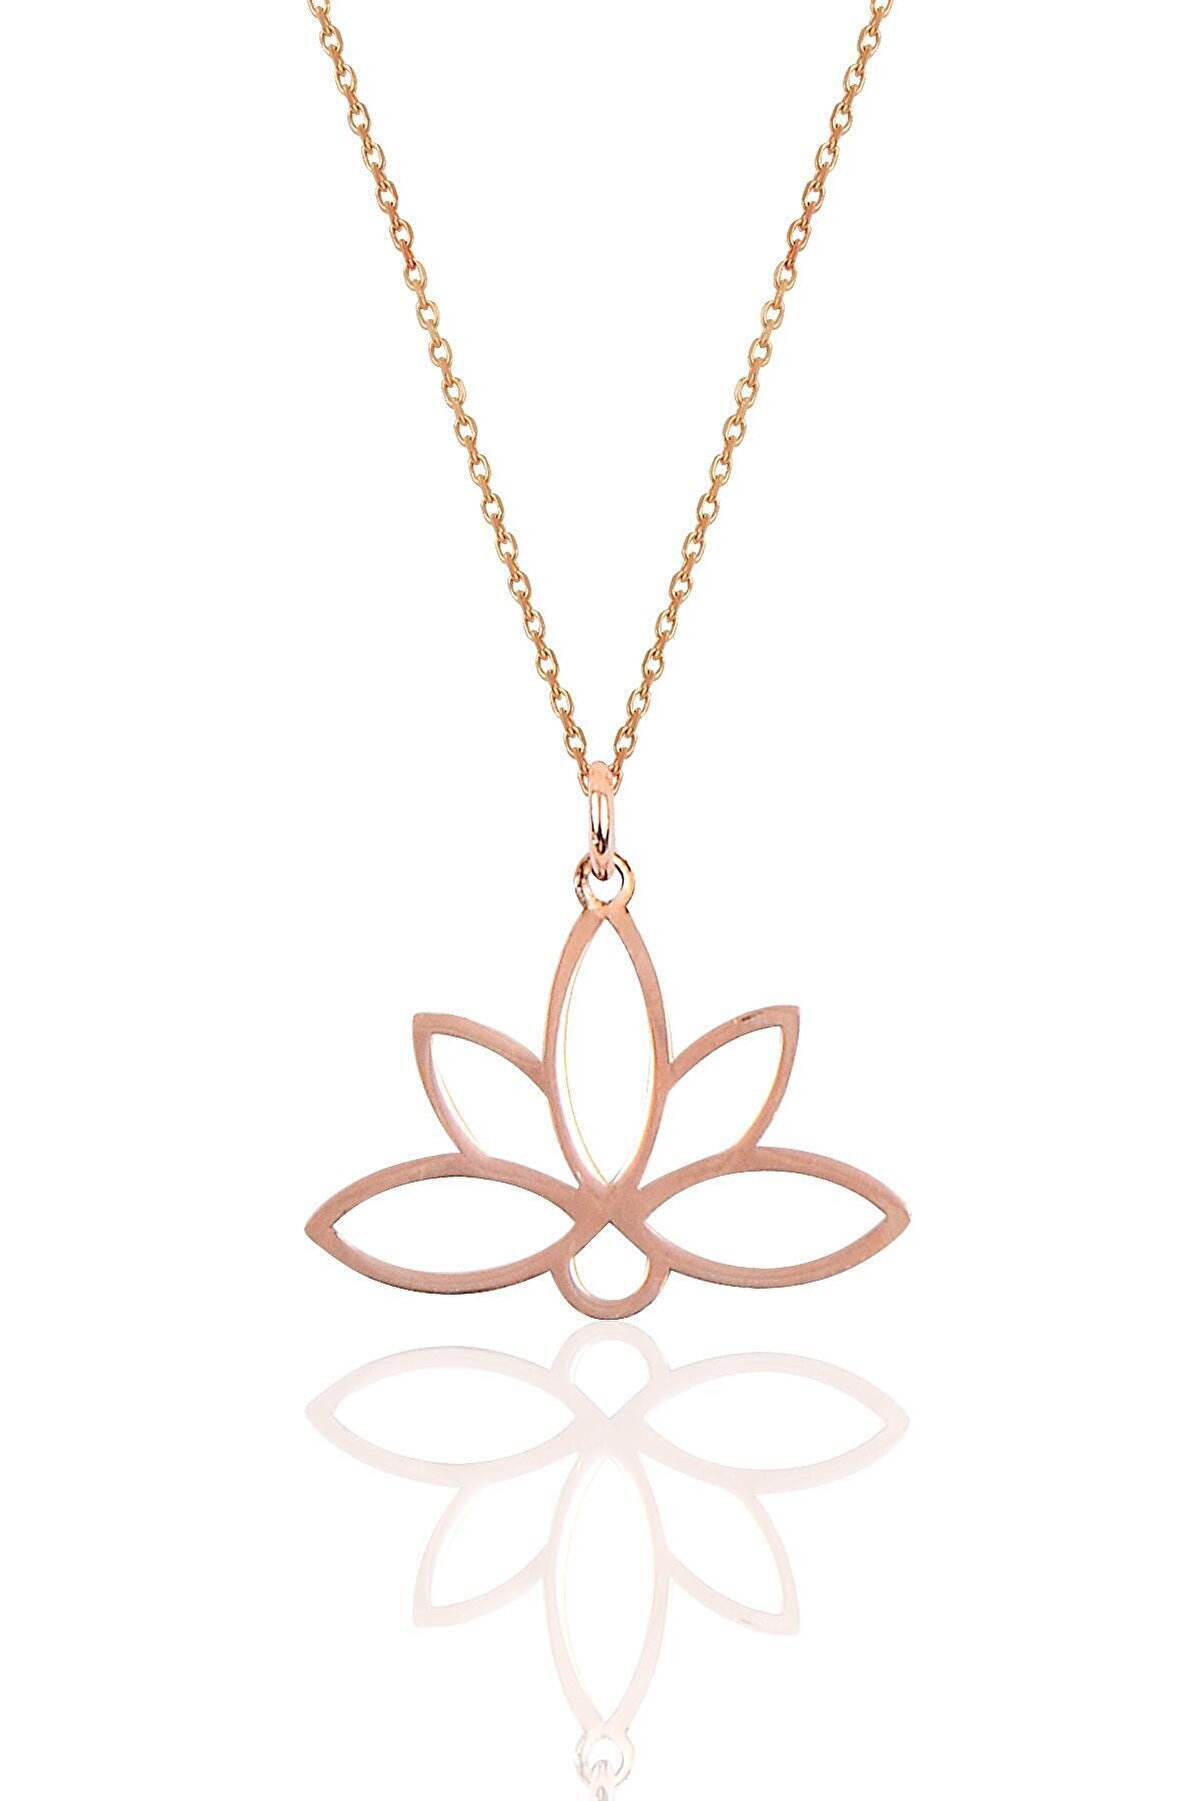 Söğütlü Silver Gümüş Sonsuz Yaşamın Simgesi Lotus Çiçeği Kolye Sgtl10085rose